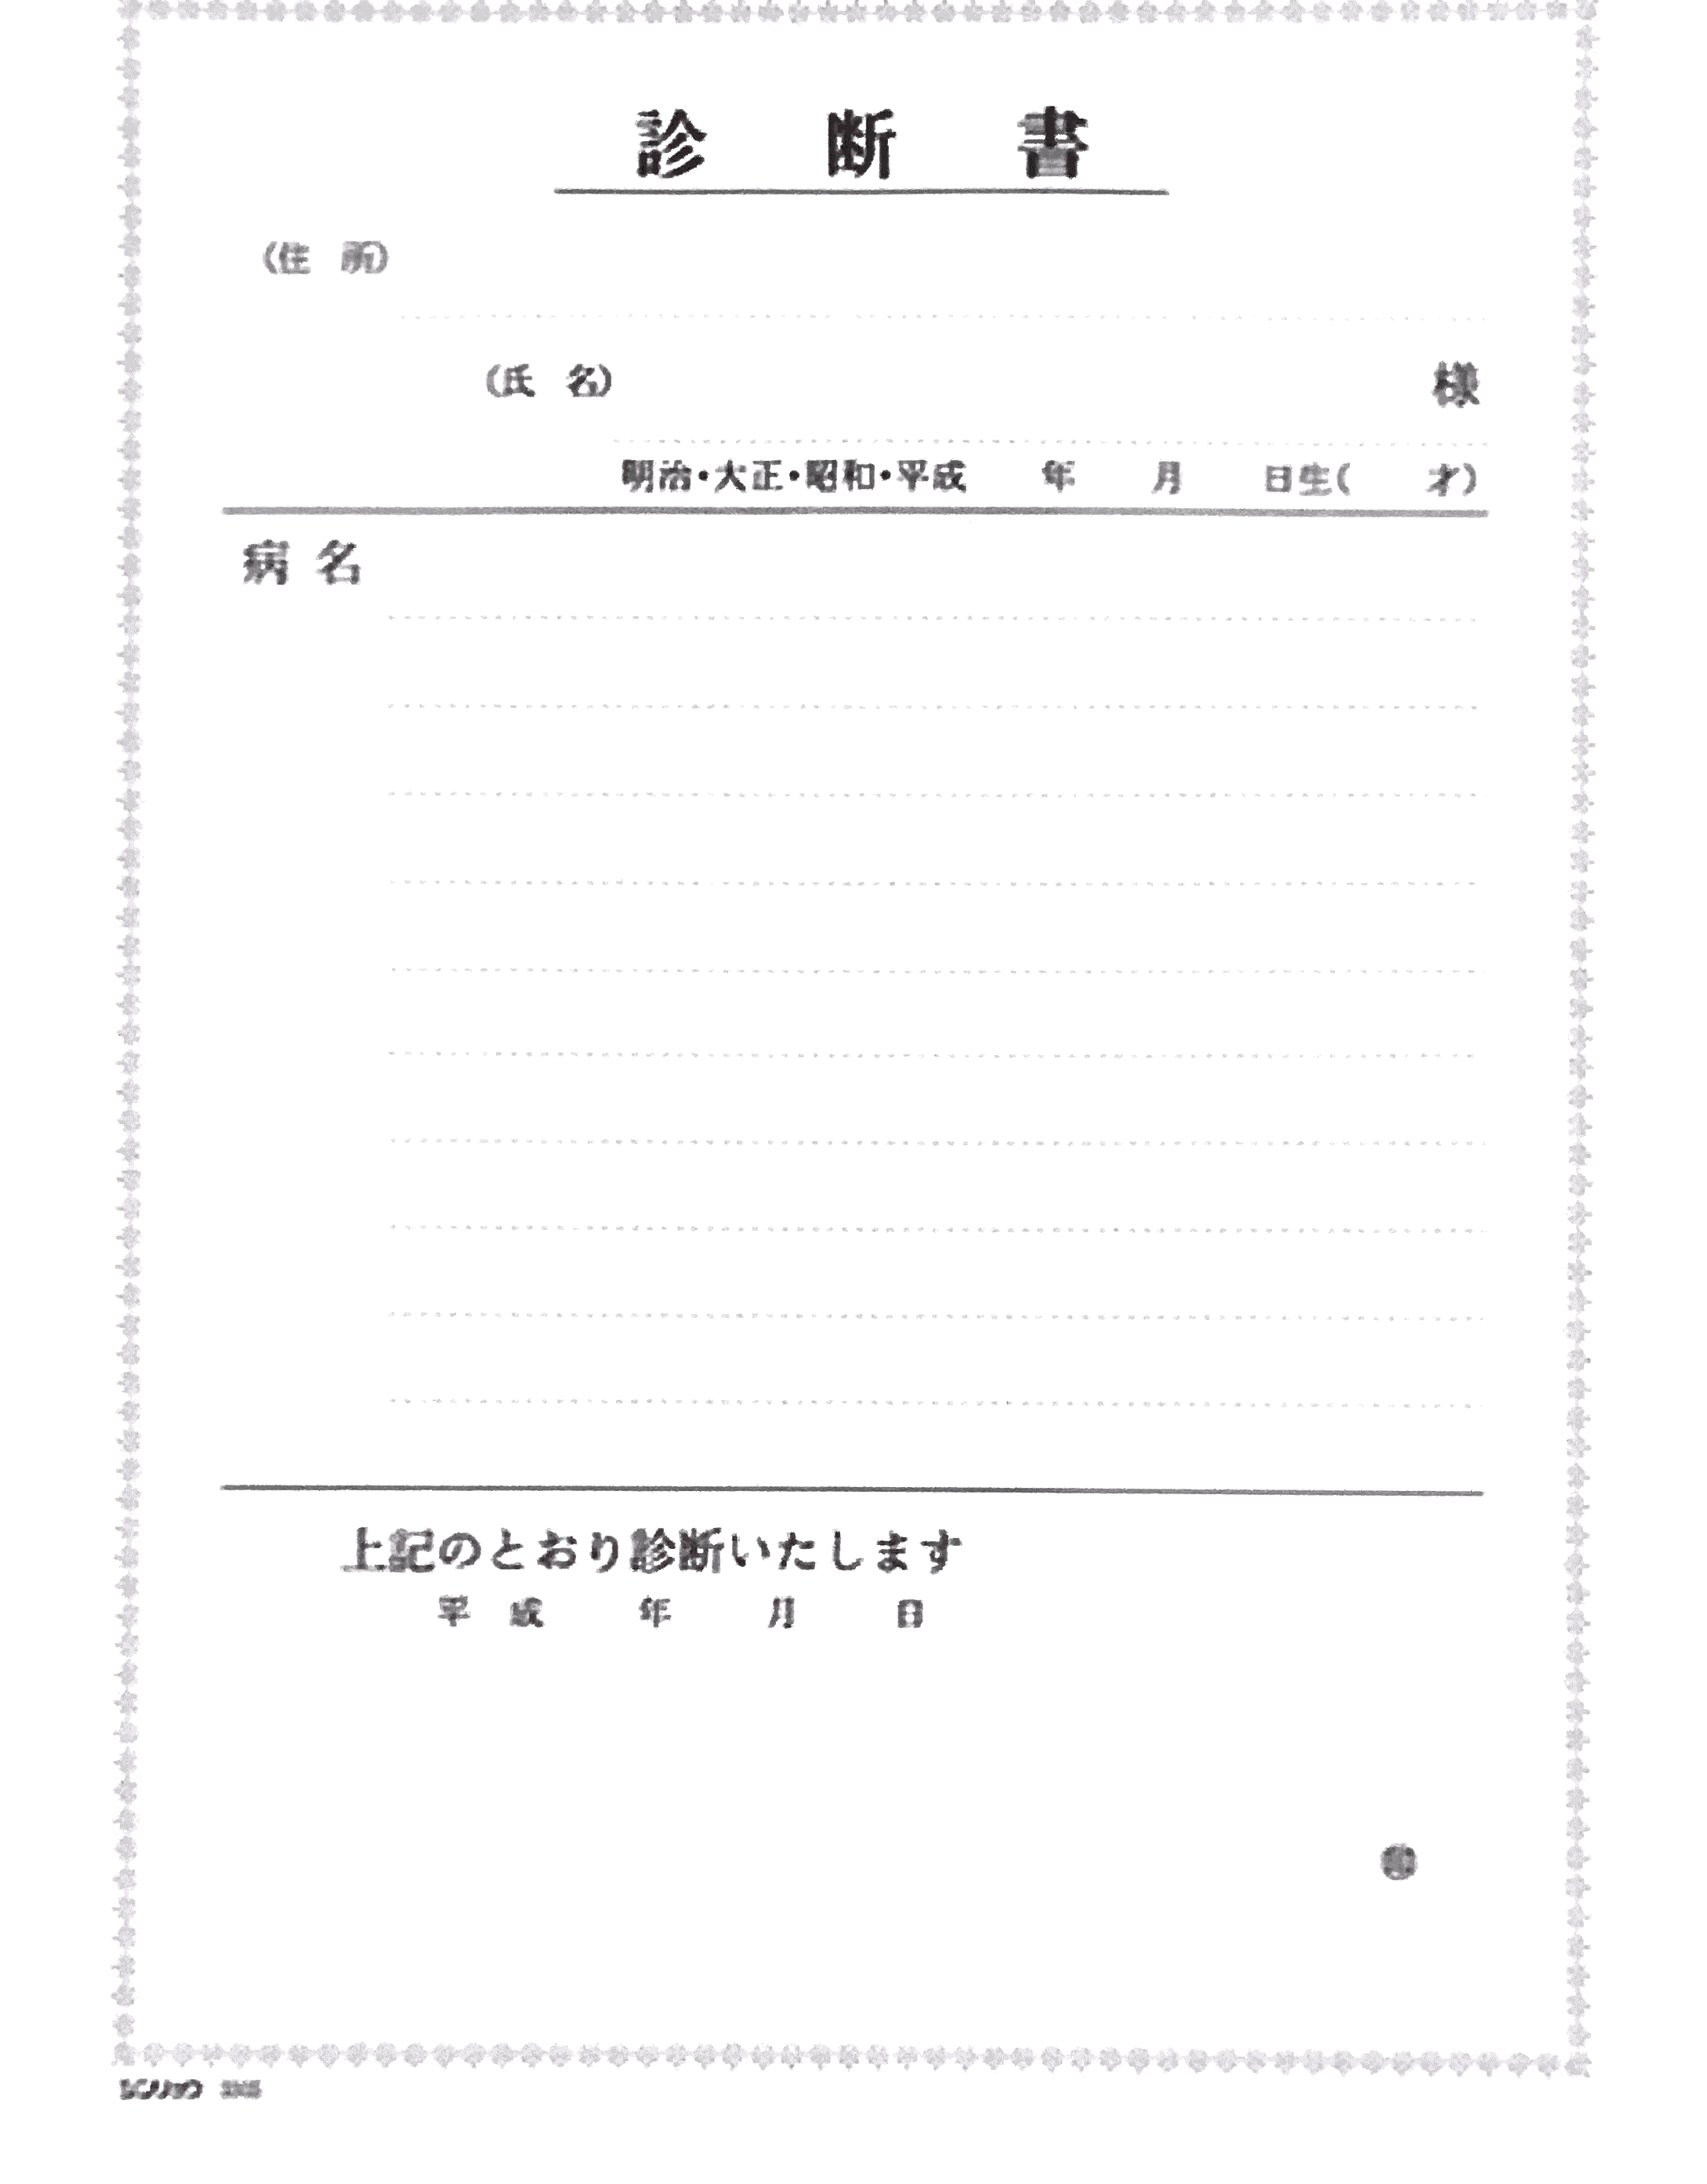 診断書 Medical Certificate Japaneseclass Jp